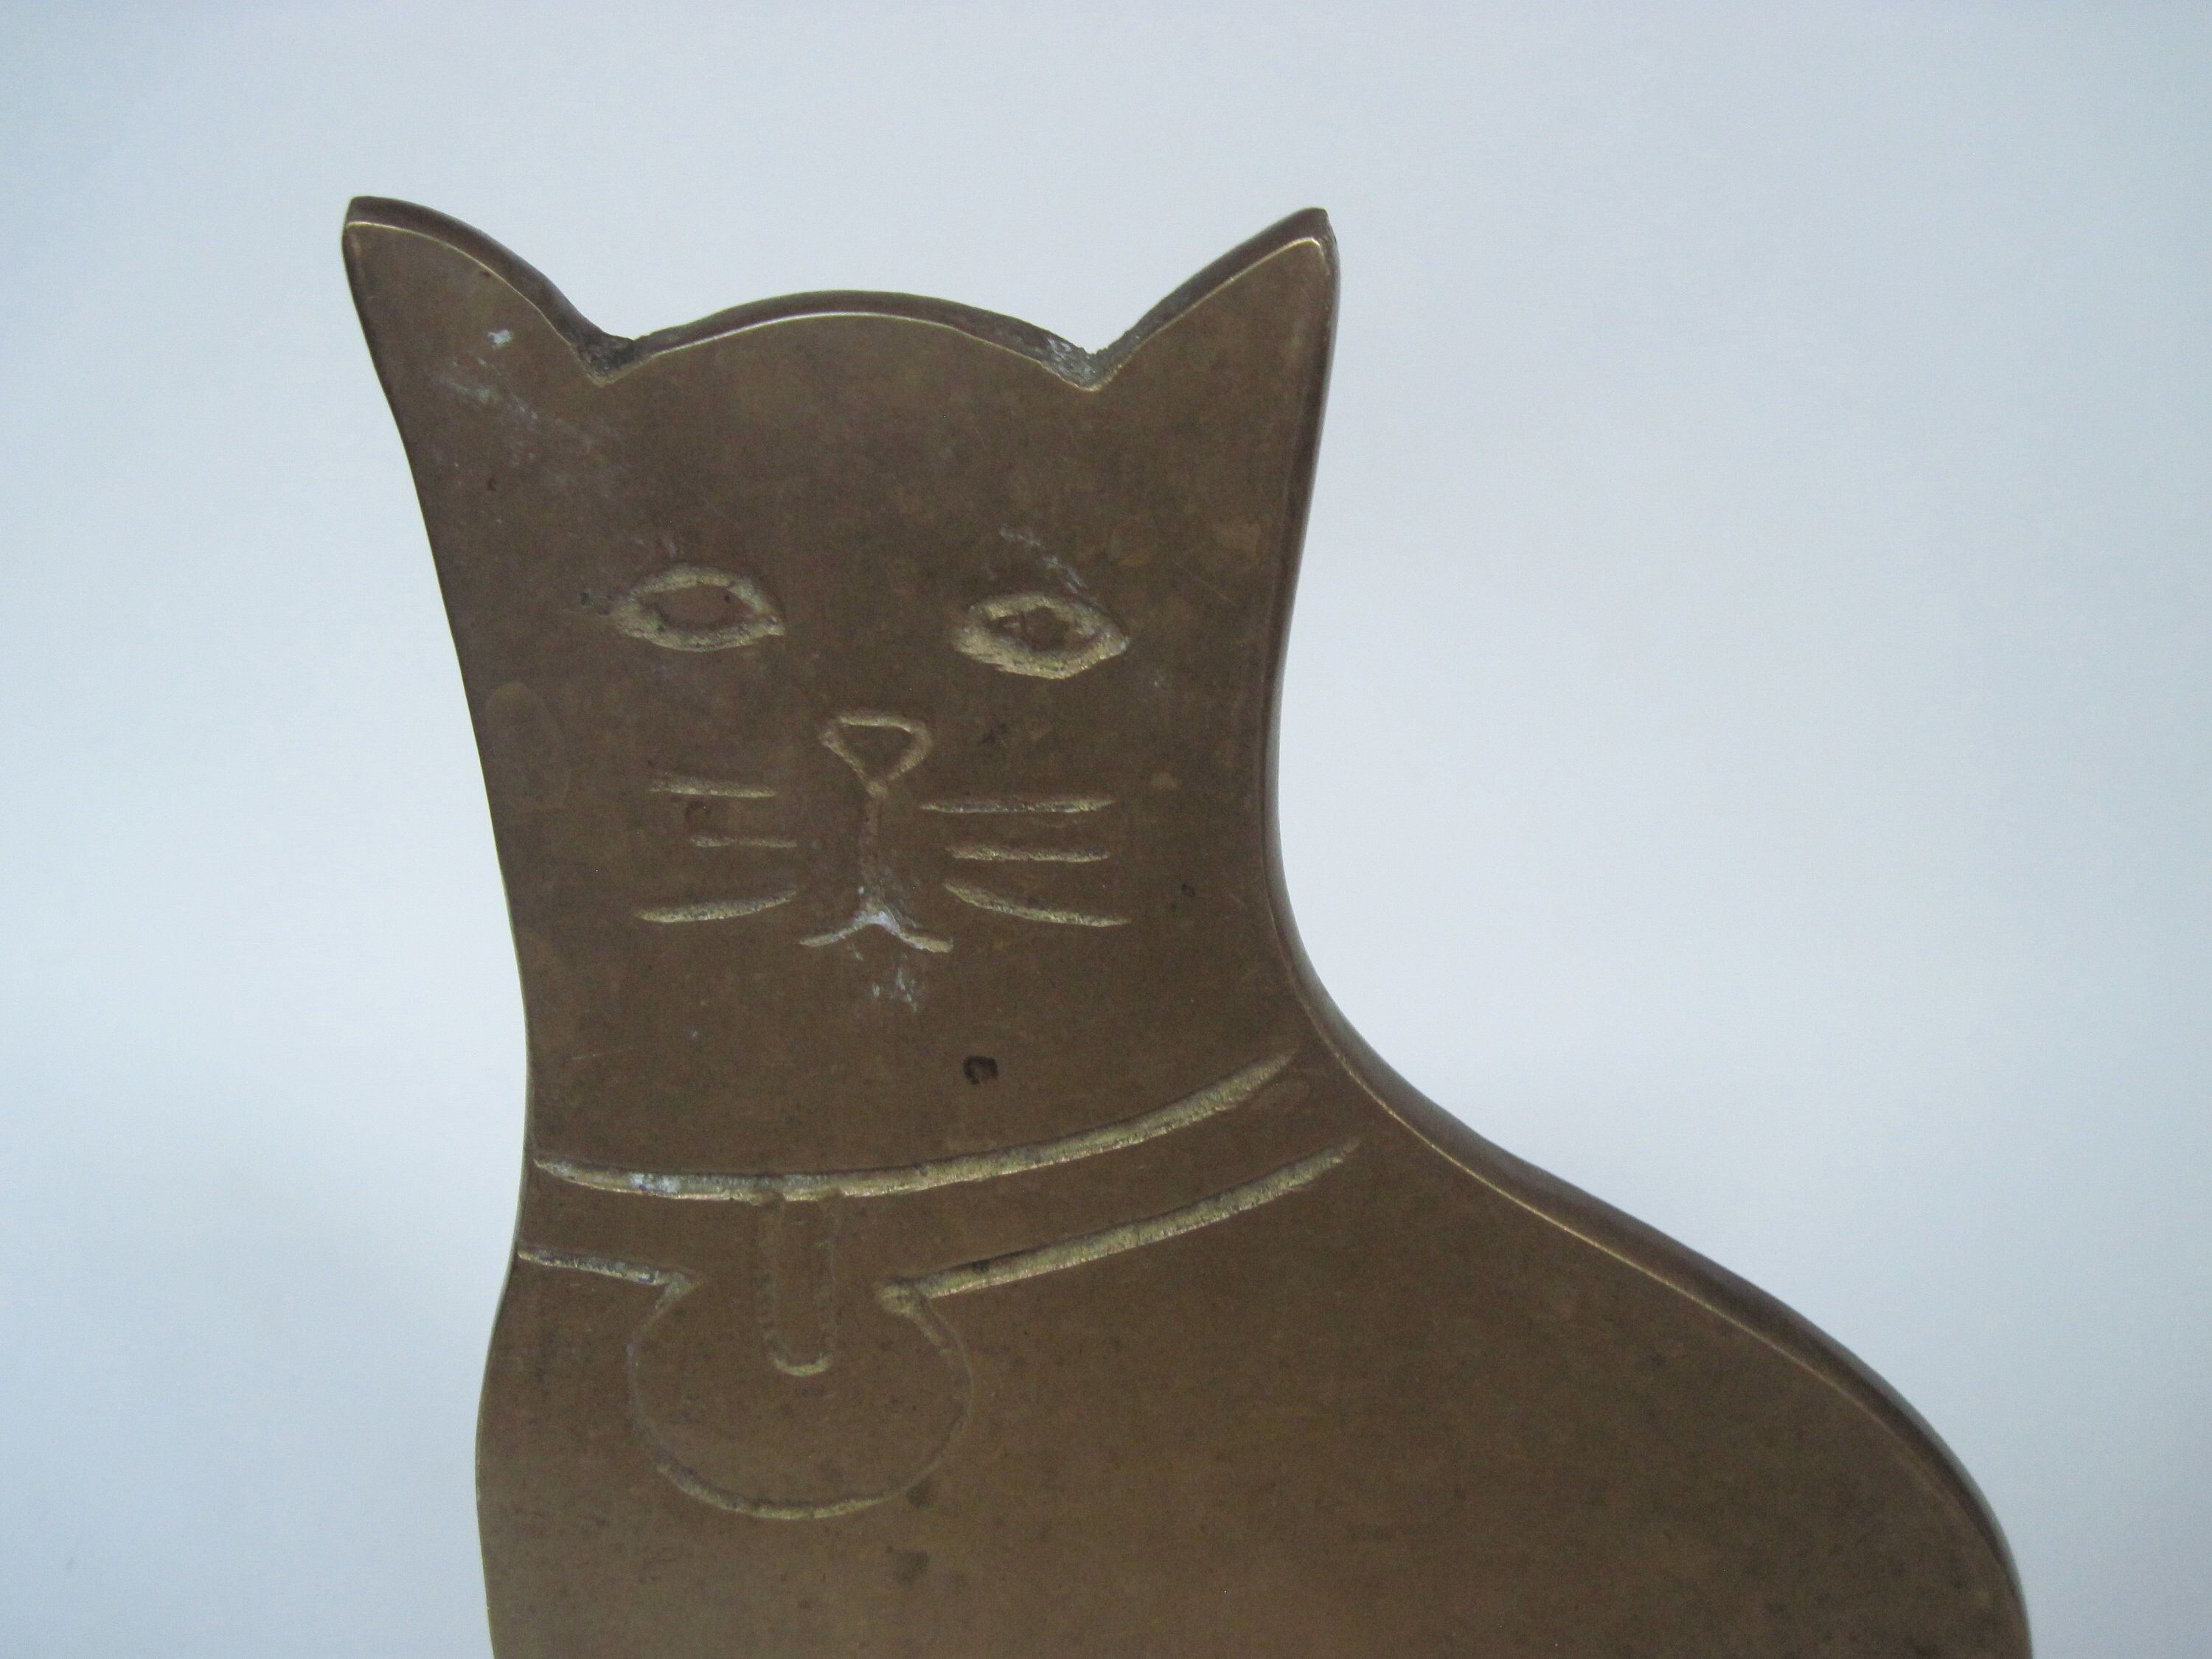 Alchemy Gothic Cat's Kitchen Cutting Board Ceramic Serving Trivet